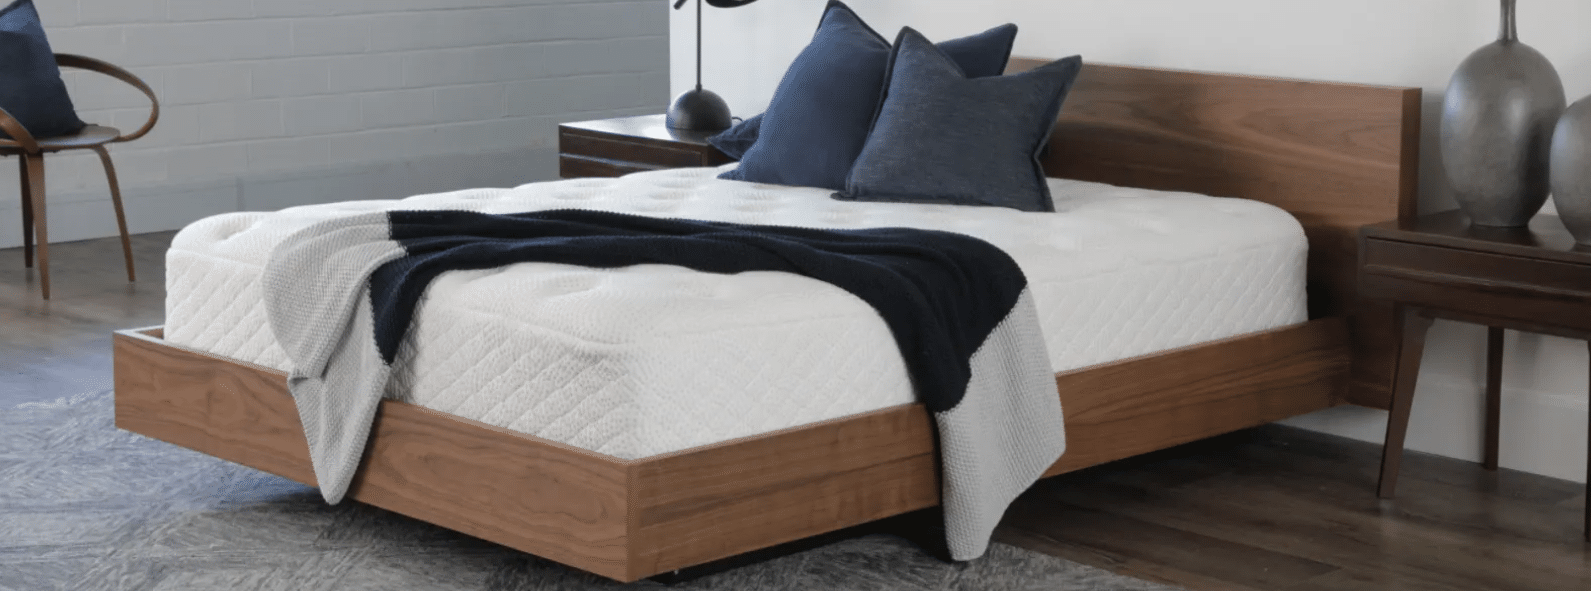 luuf simplicity mattress review